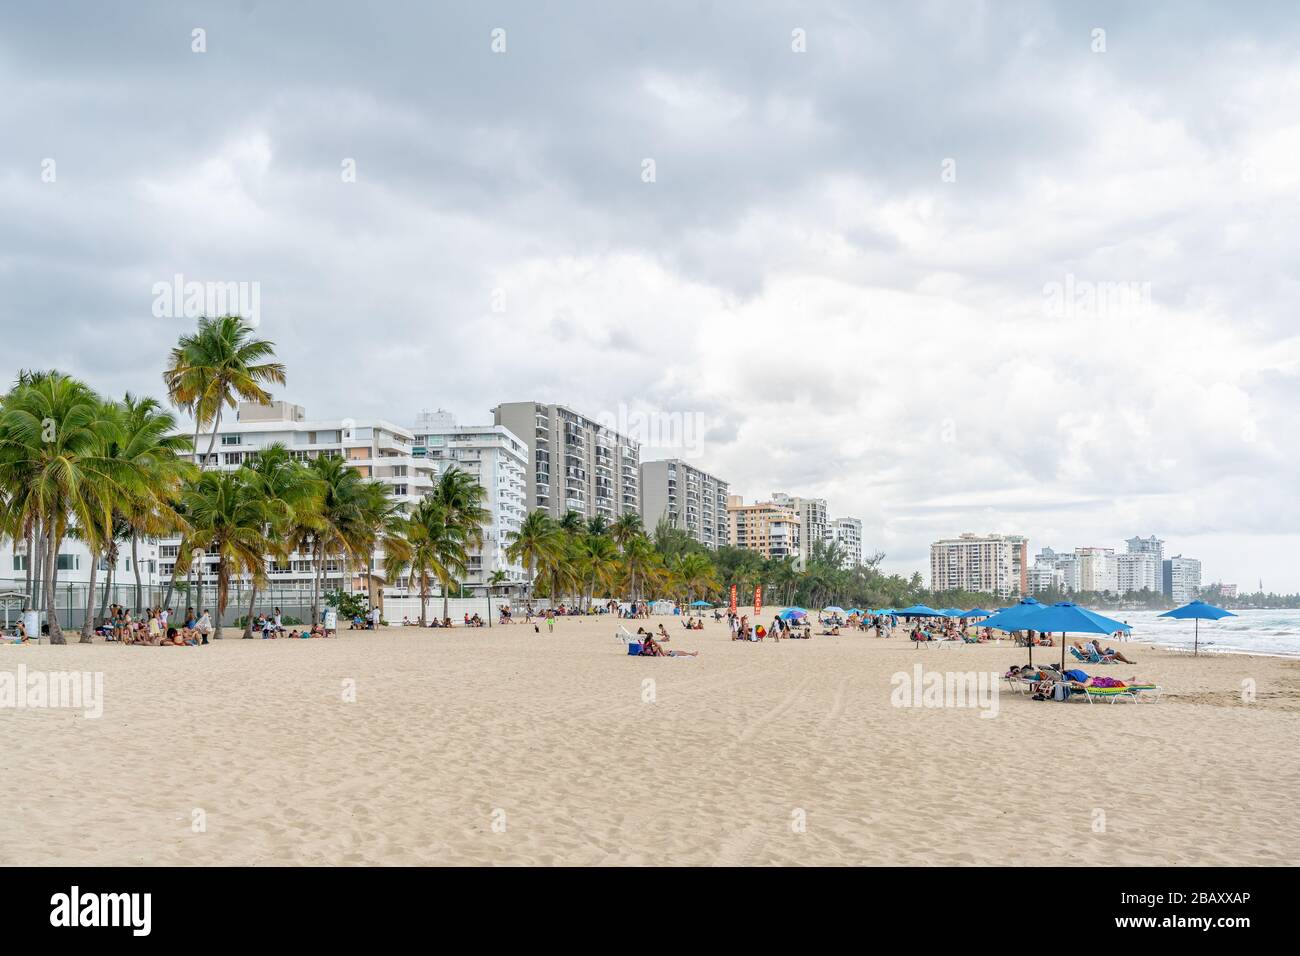 Isla Verde, Puerto Rico - March 29, 2019: Beach-goers Enjoying the Beautiful Beaches of Isla Verde, Puerto Rico. Stock Photo